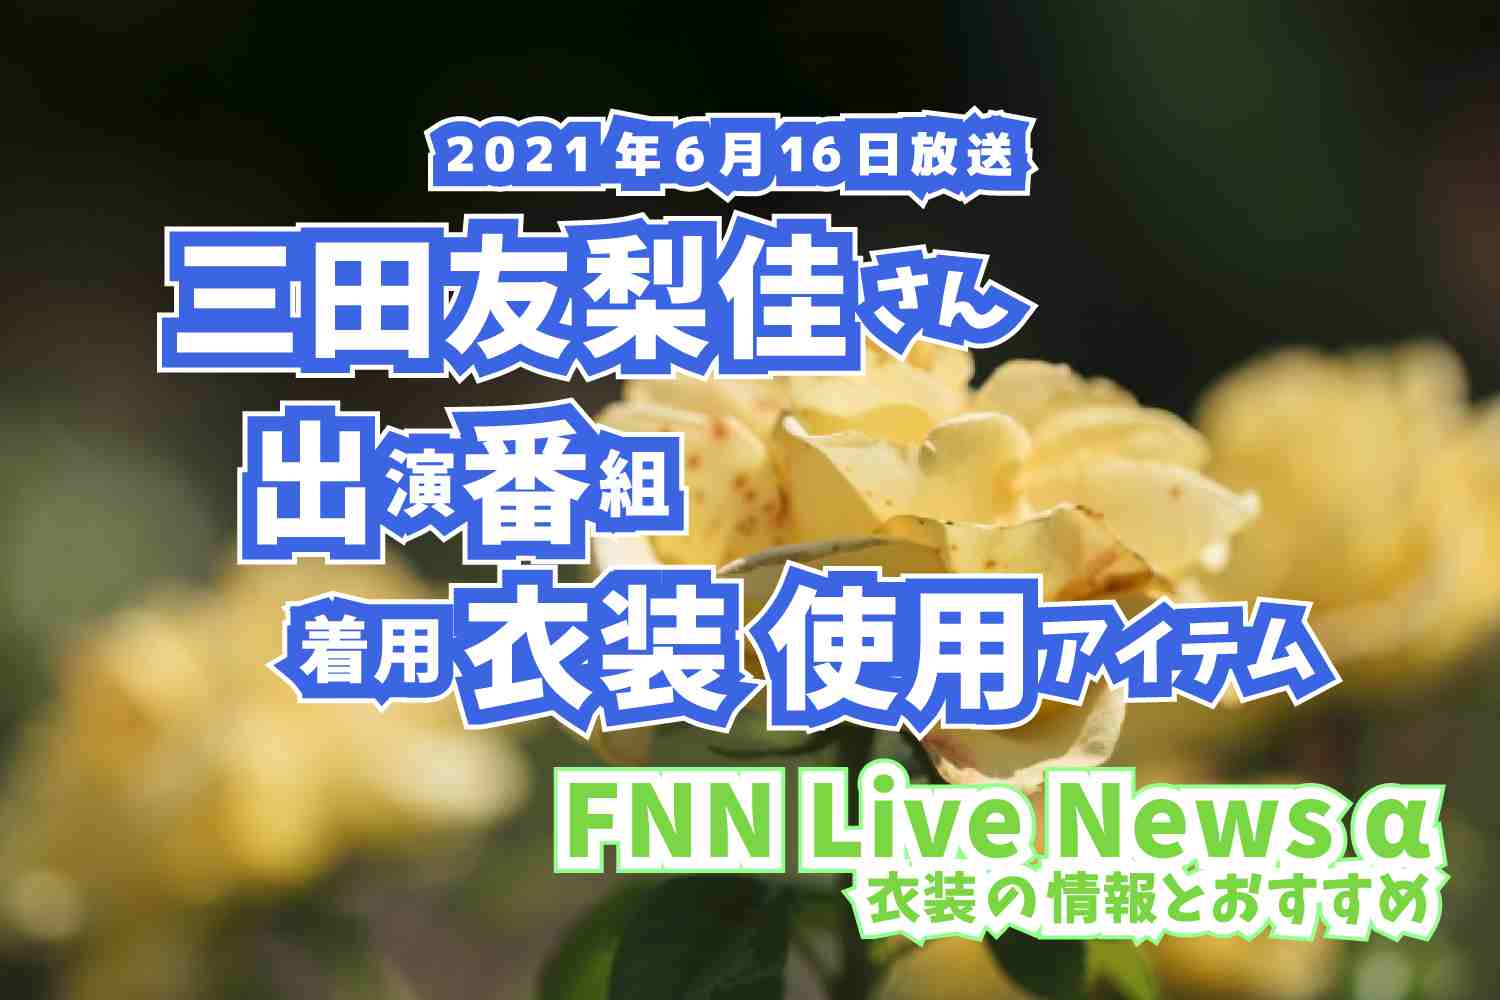 FNN Live News α　三田友梨佳さん　衣装　2021年6月16日放送